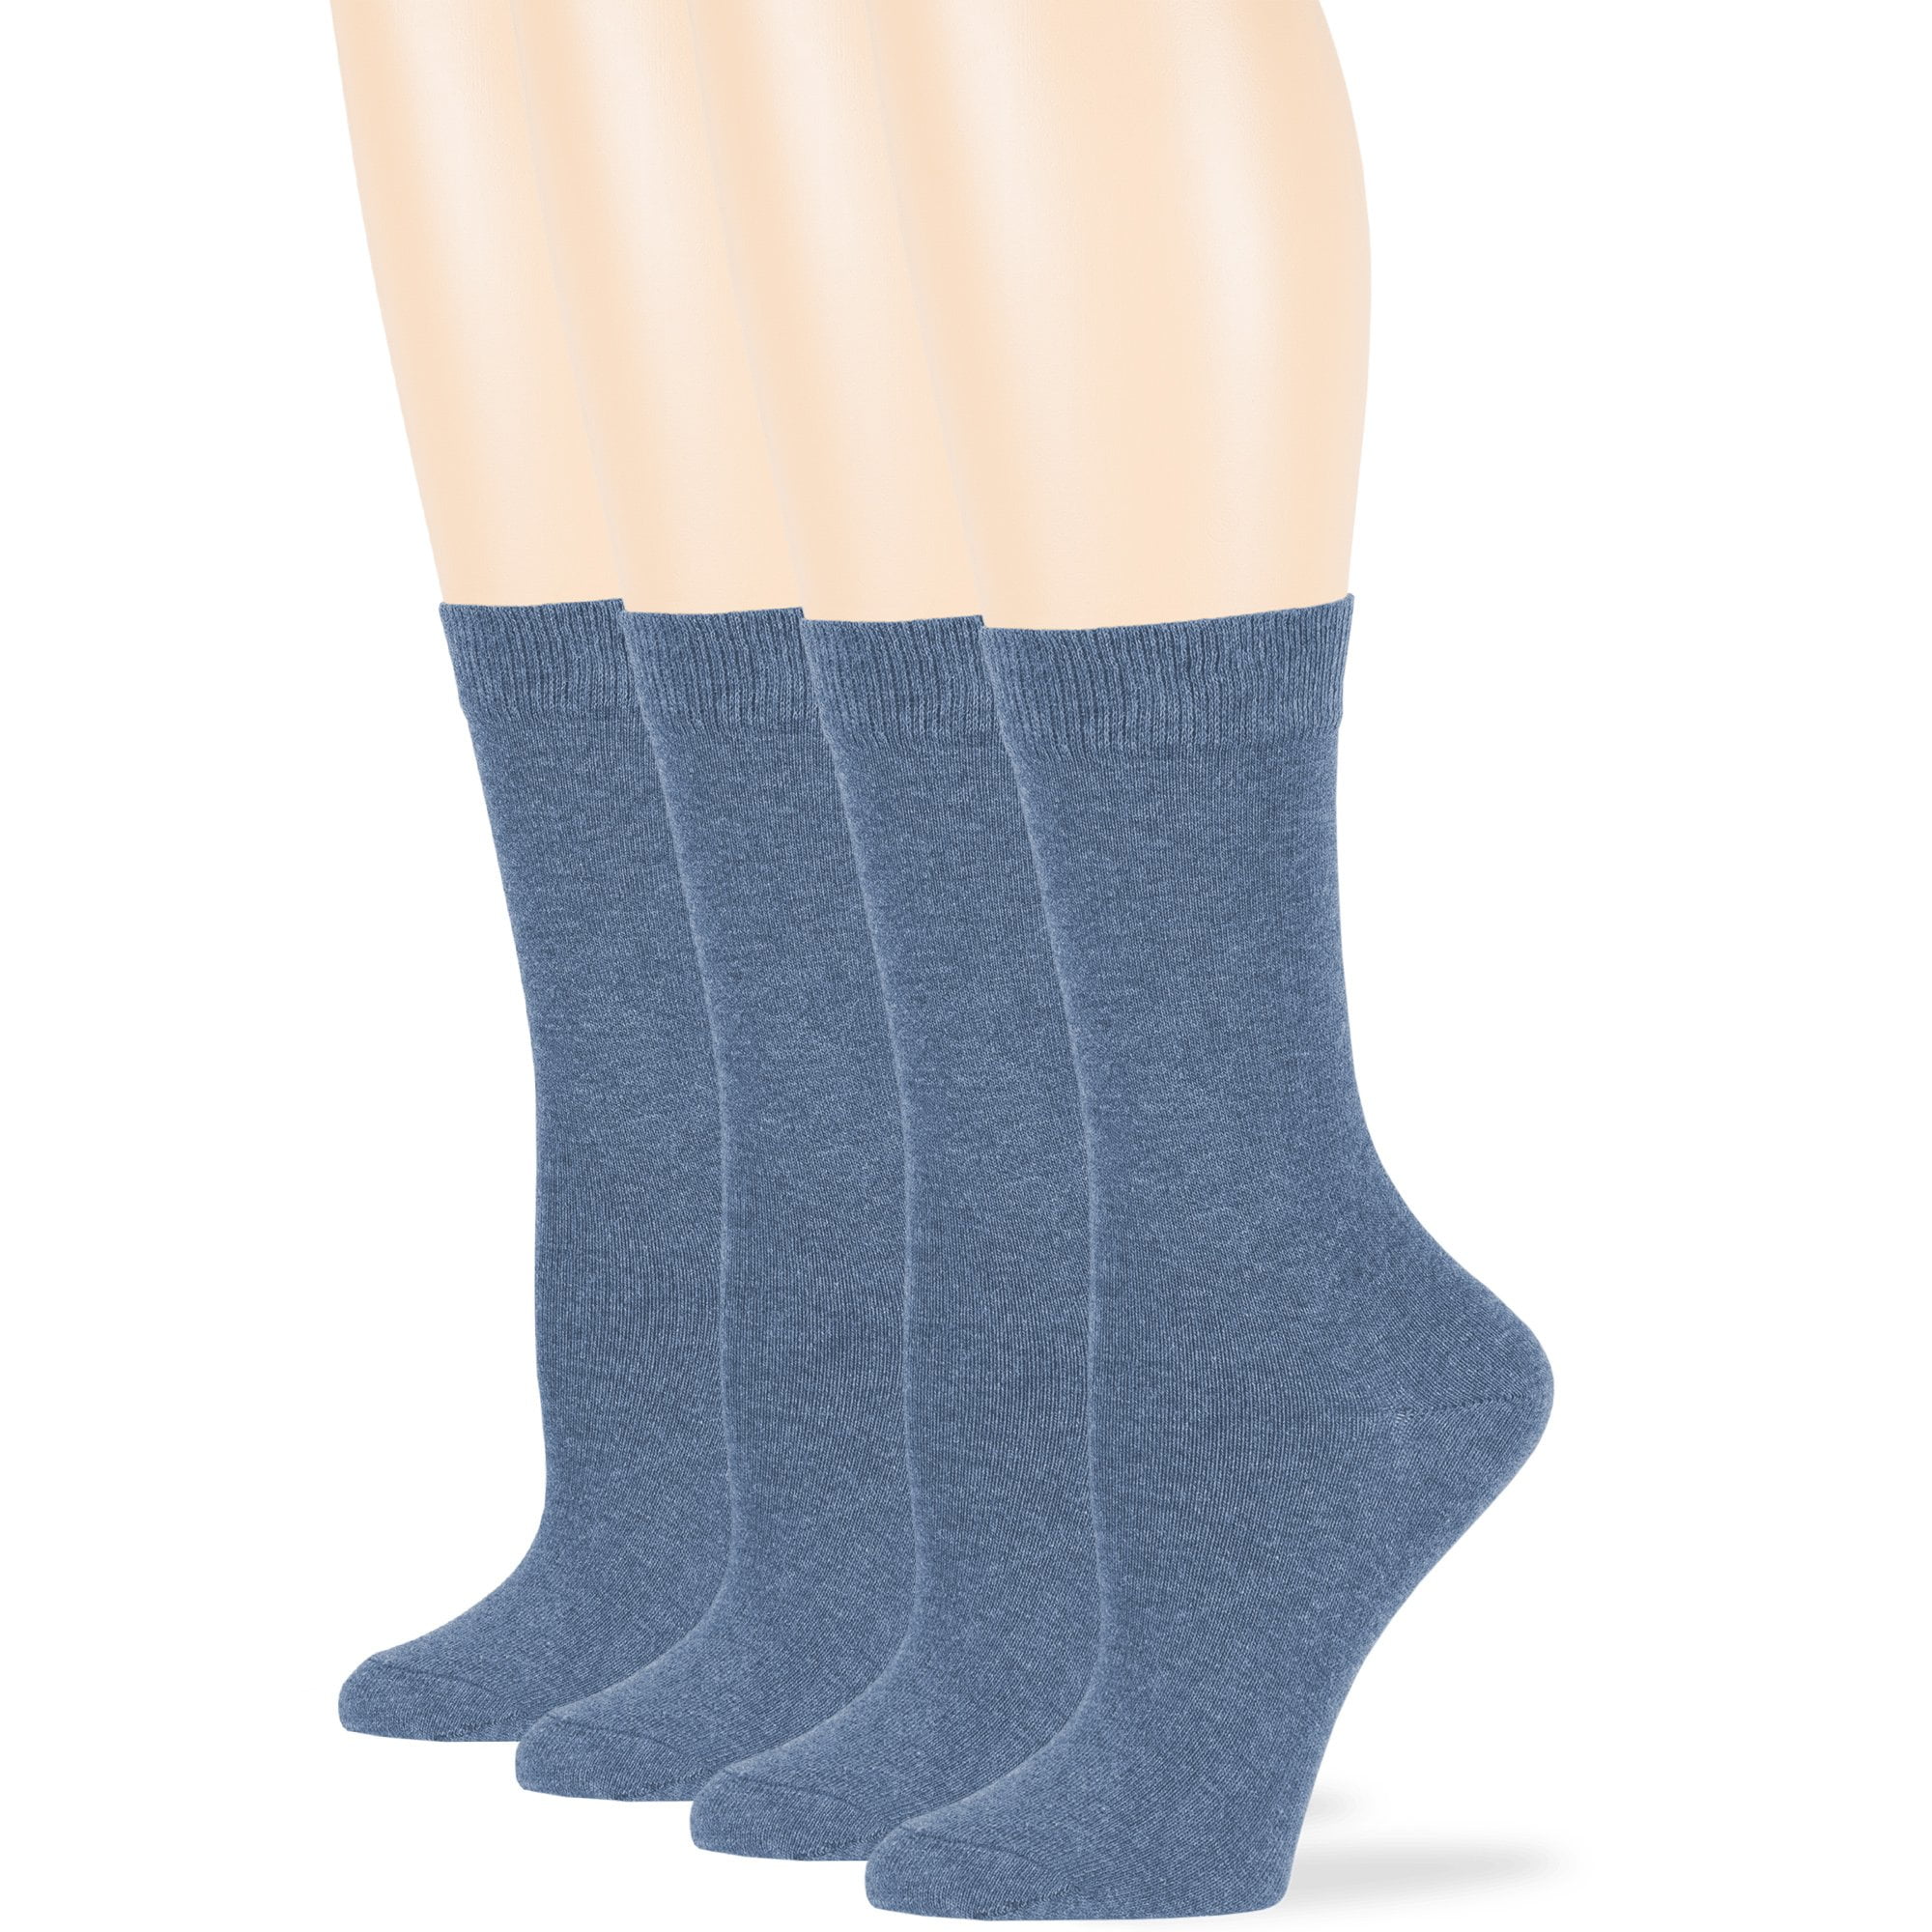 Women's Cotton 4 Pack Solid Dress Business Crew Socks Medium 9-11 Denim Blue